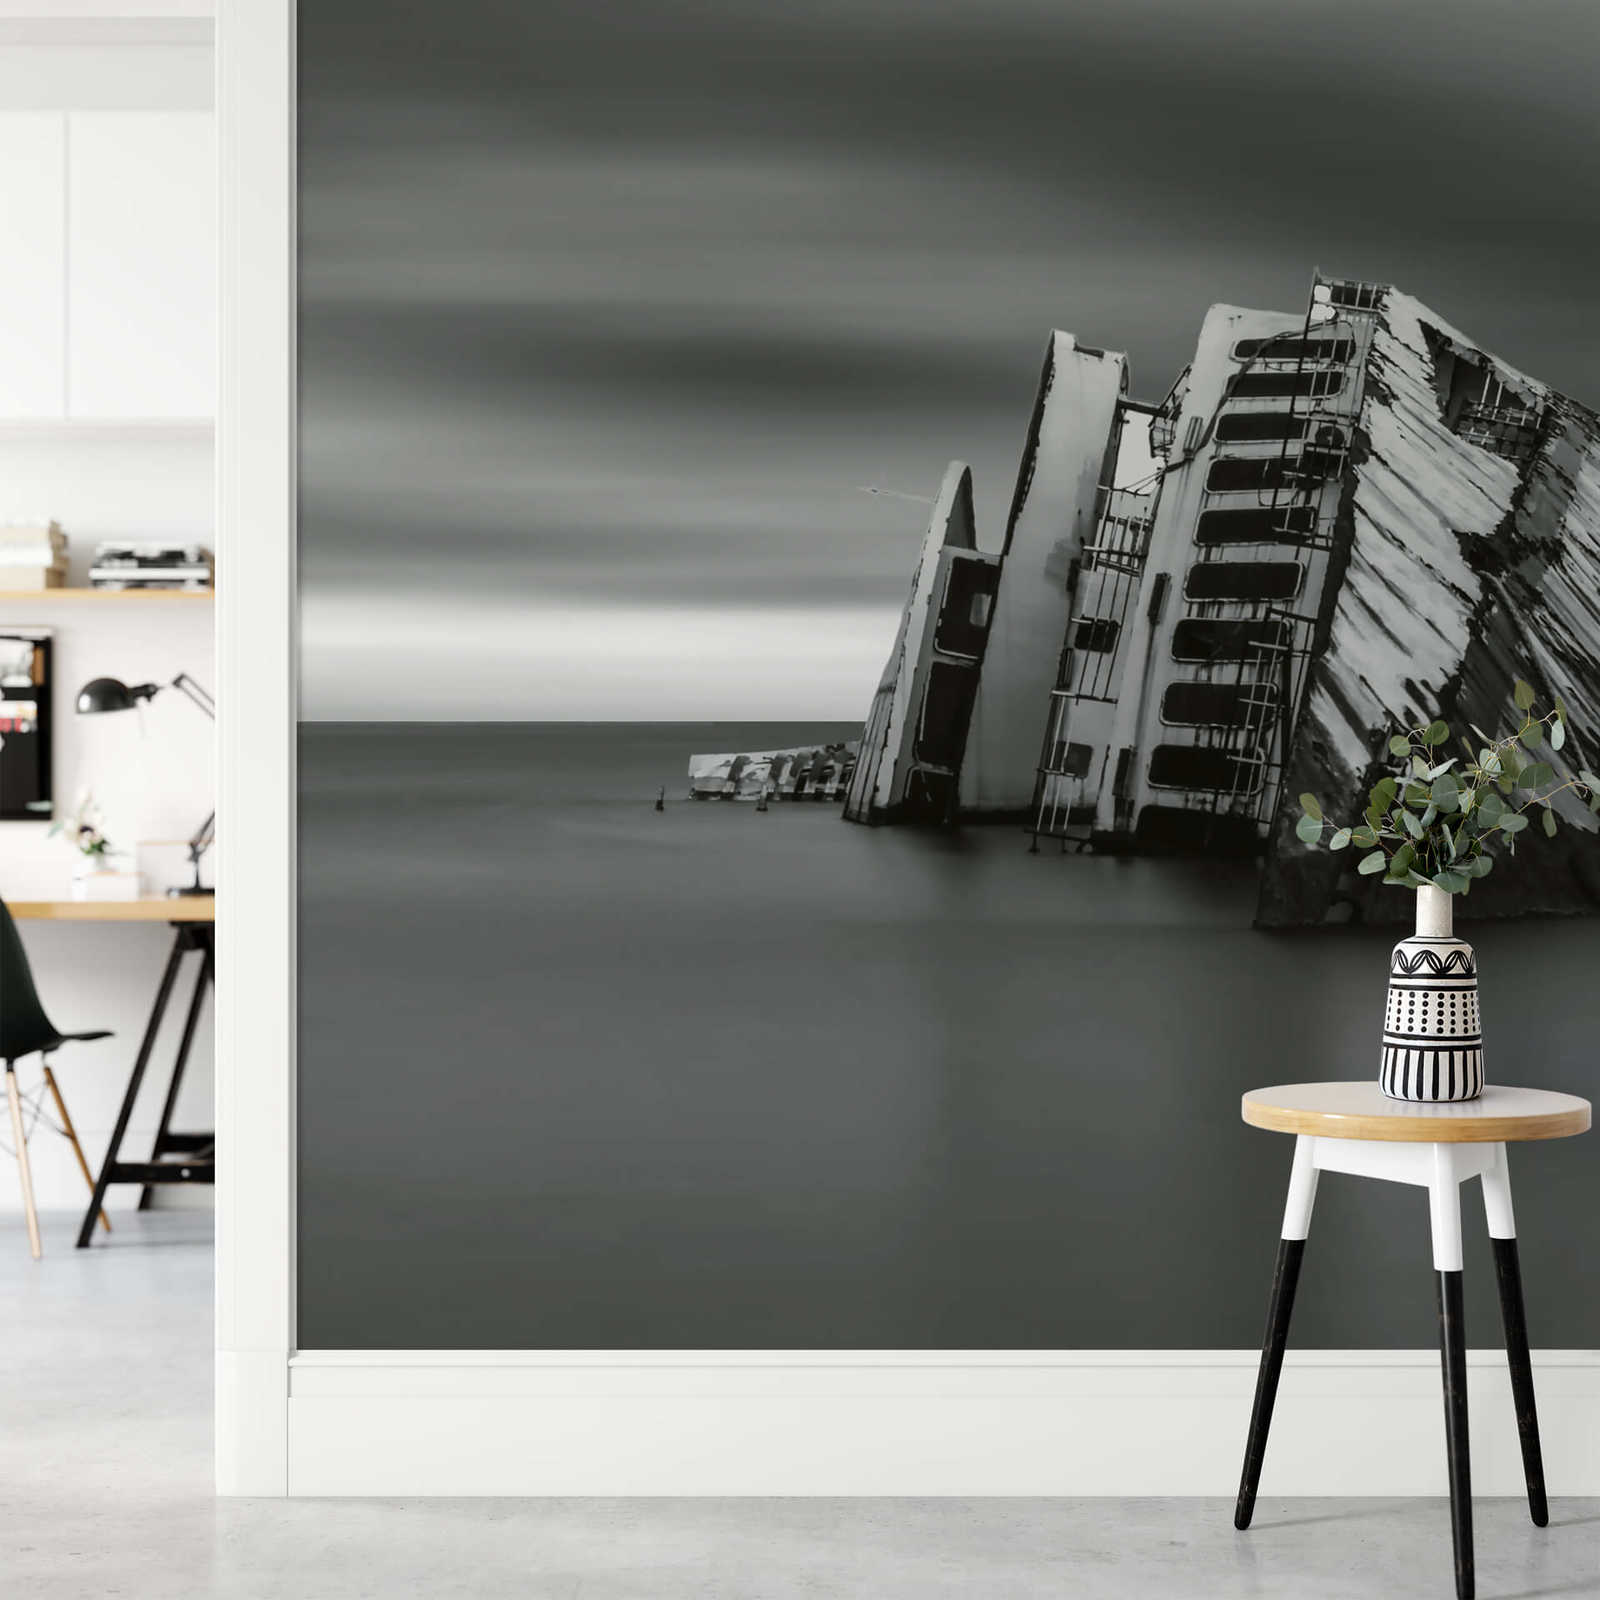             Photo wallpaper sea with shipwreck - grey, white, black
        